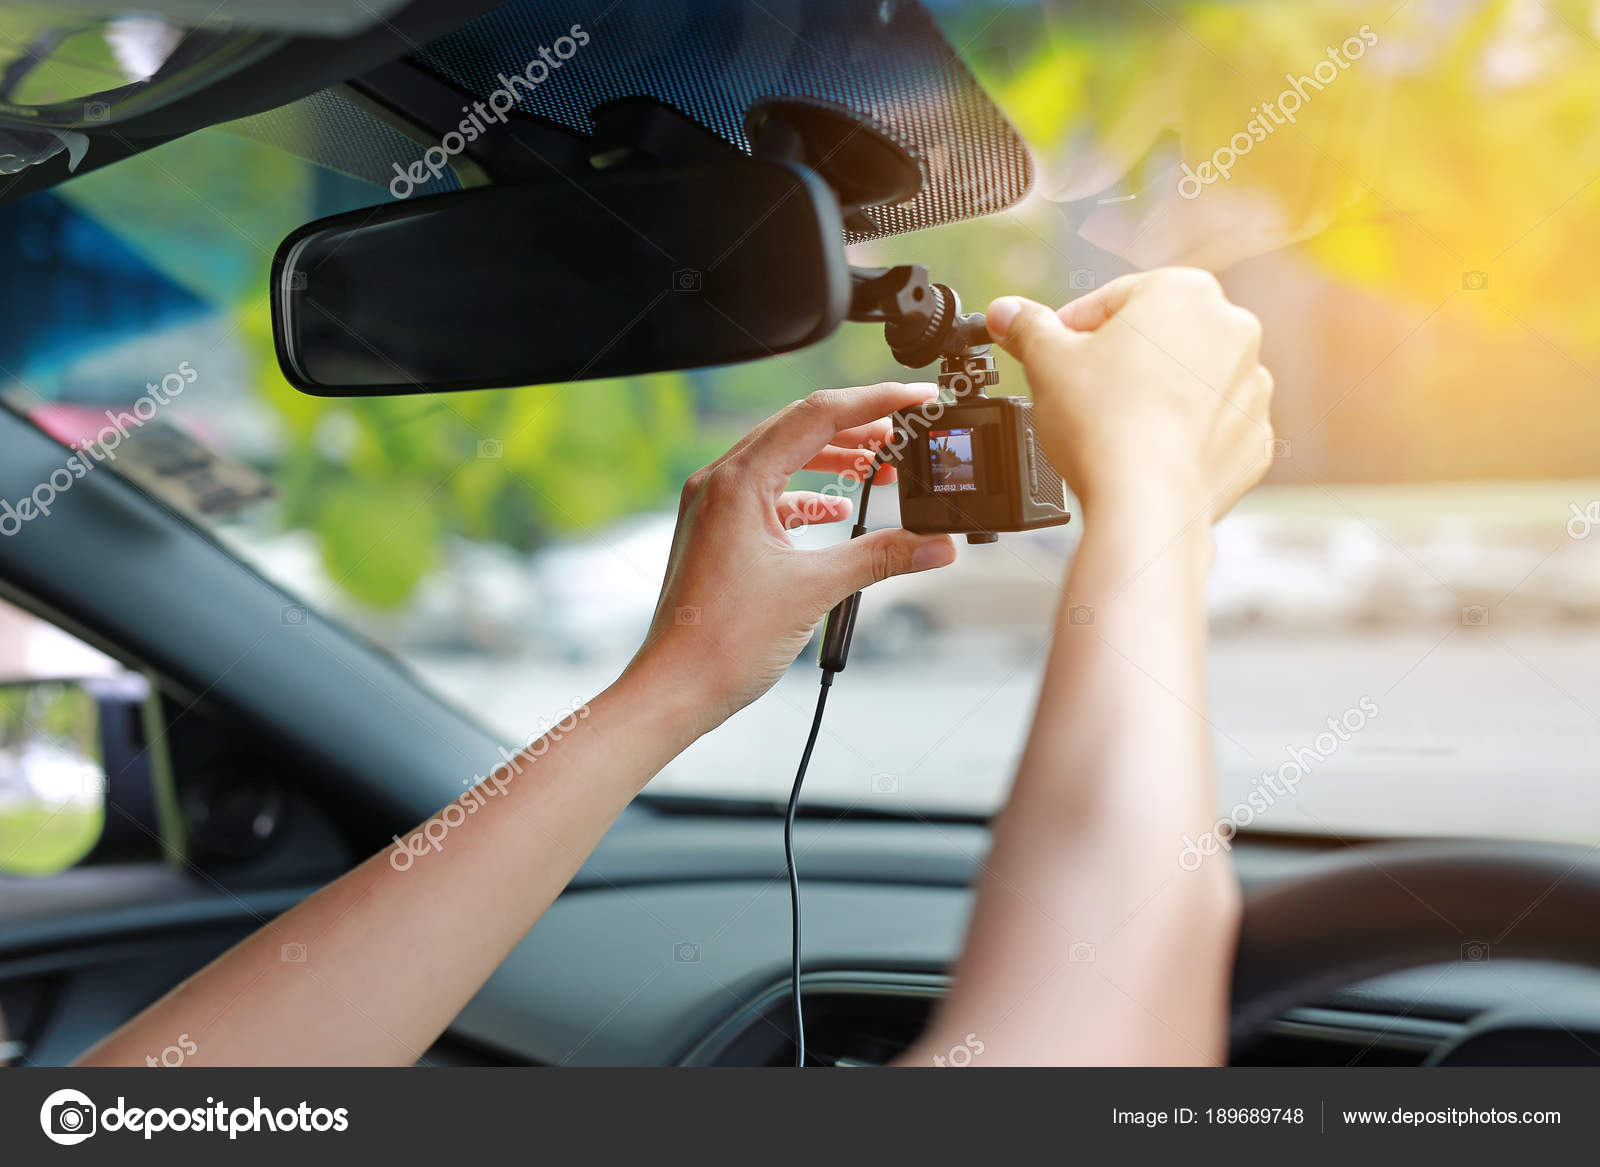 https://st3.depositphotos.com/12318692/18968/i/1600/depositphotos_189689748-stock-photo-hands-installation-front-camera-car.jpg